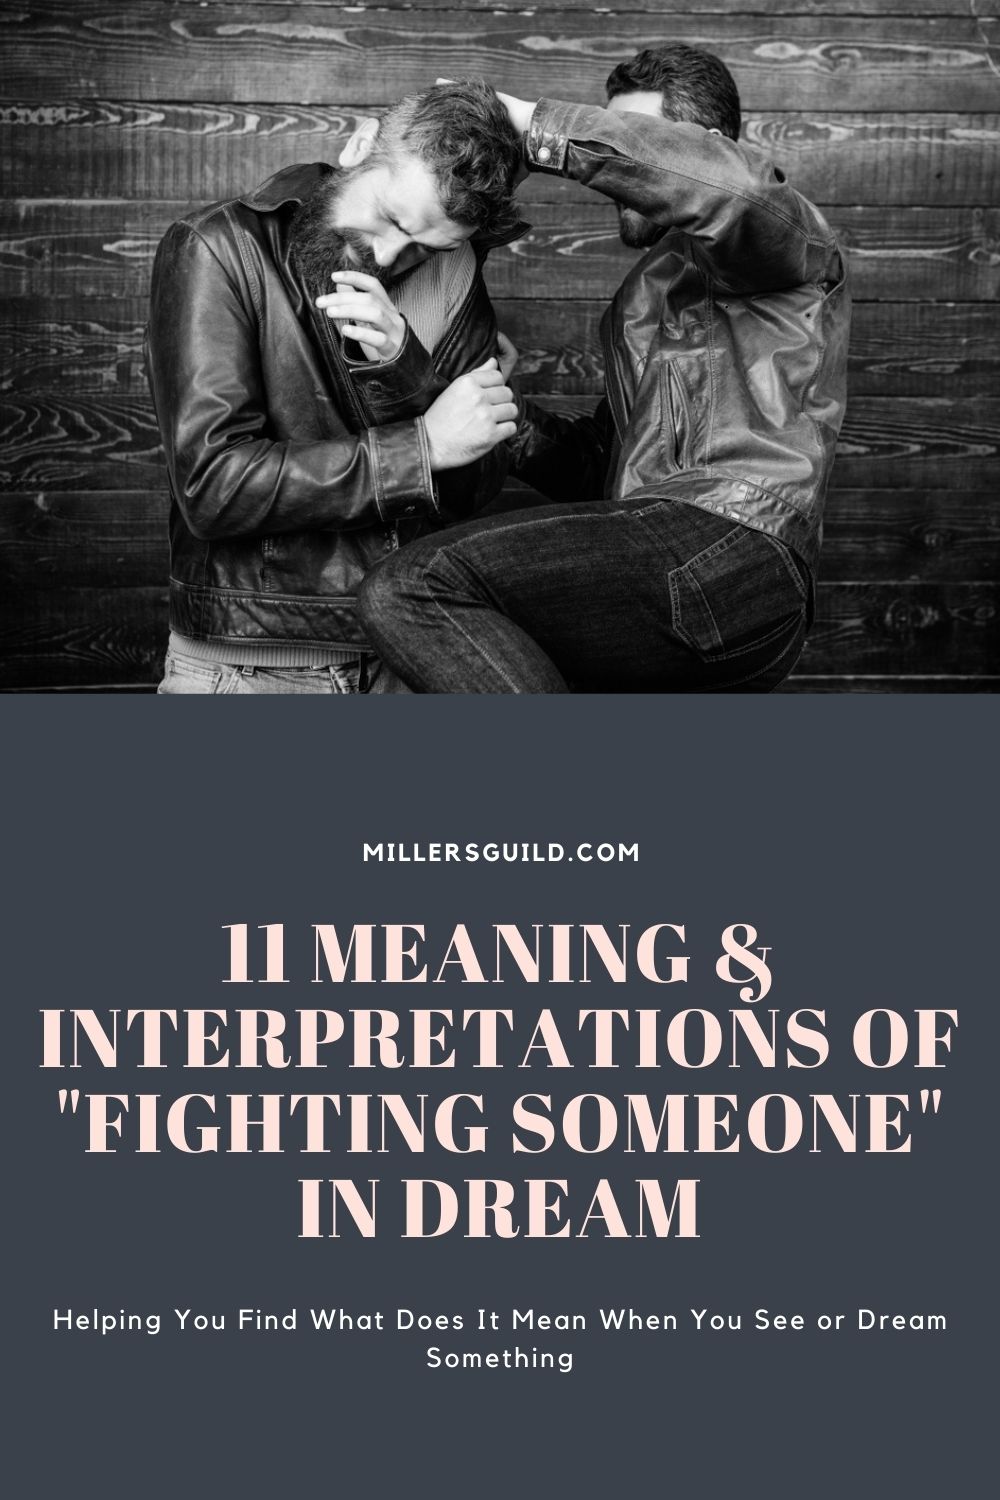 Dream Interpretations Of Fighting Someone